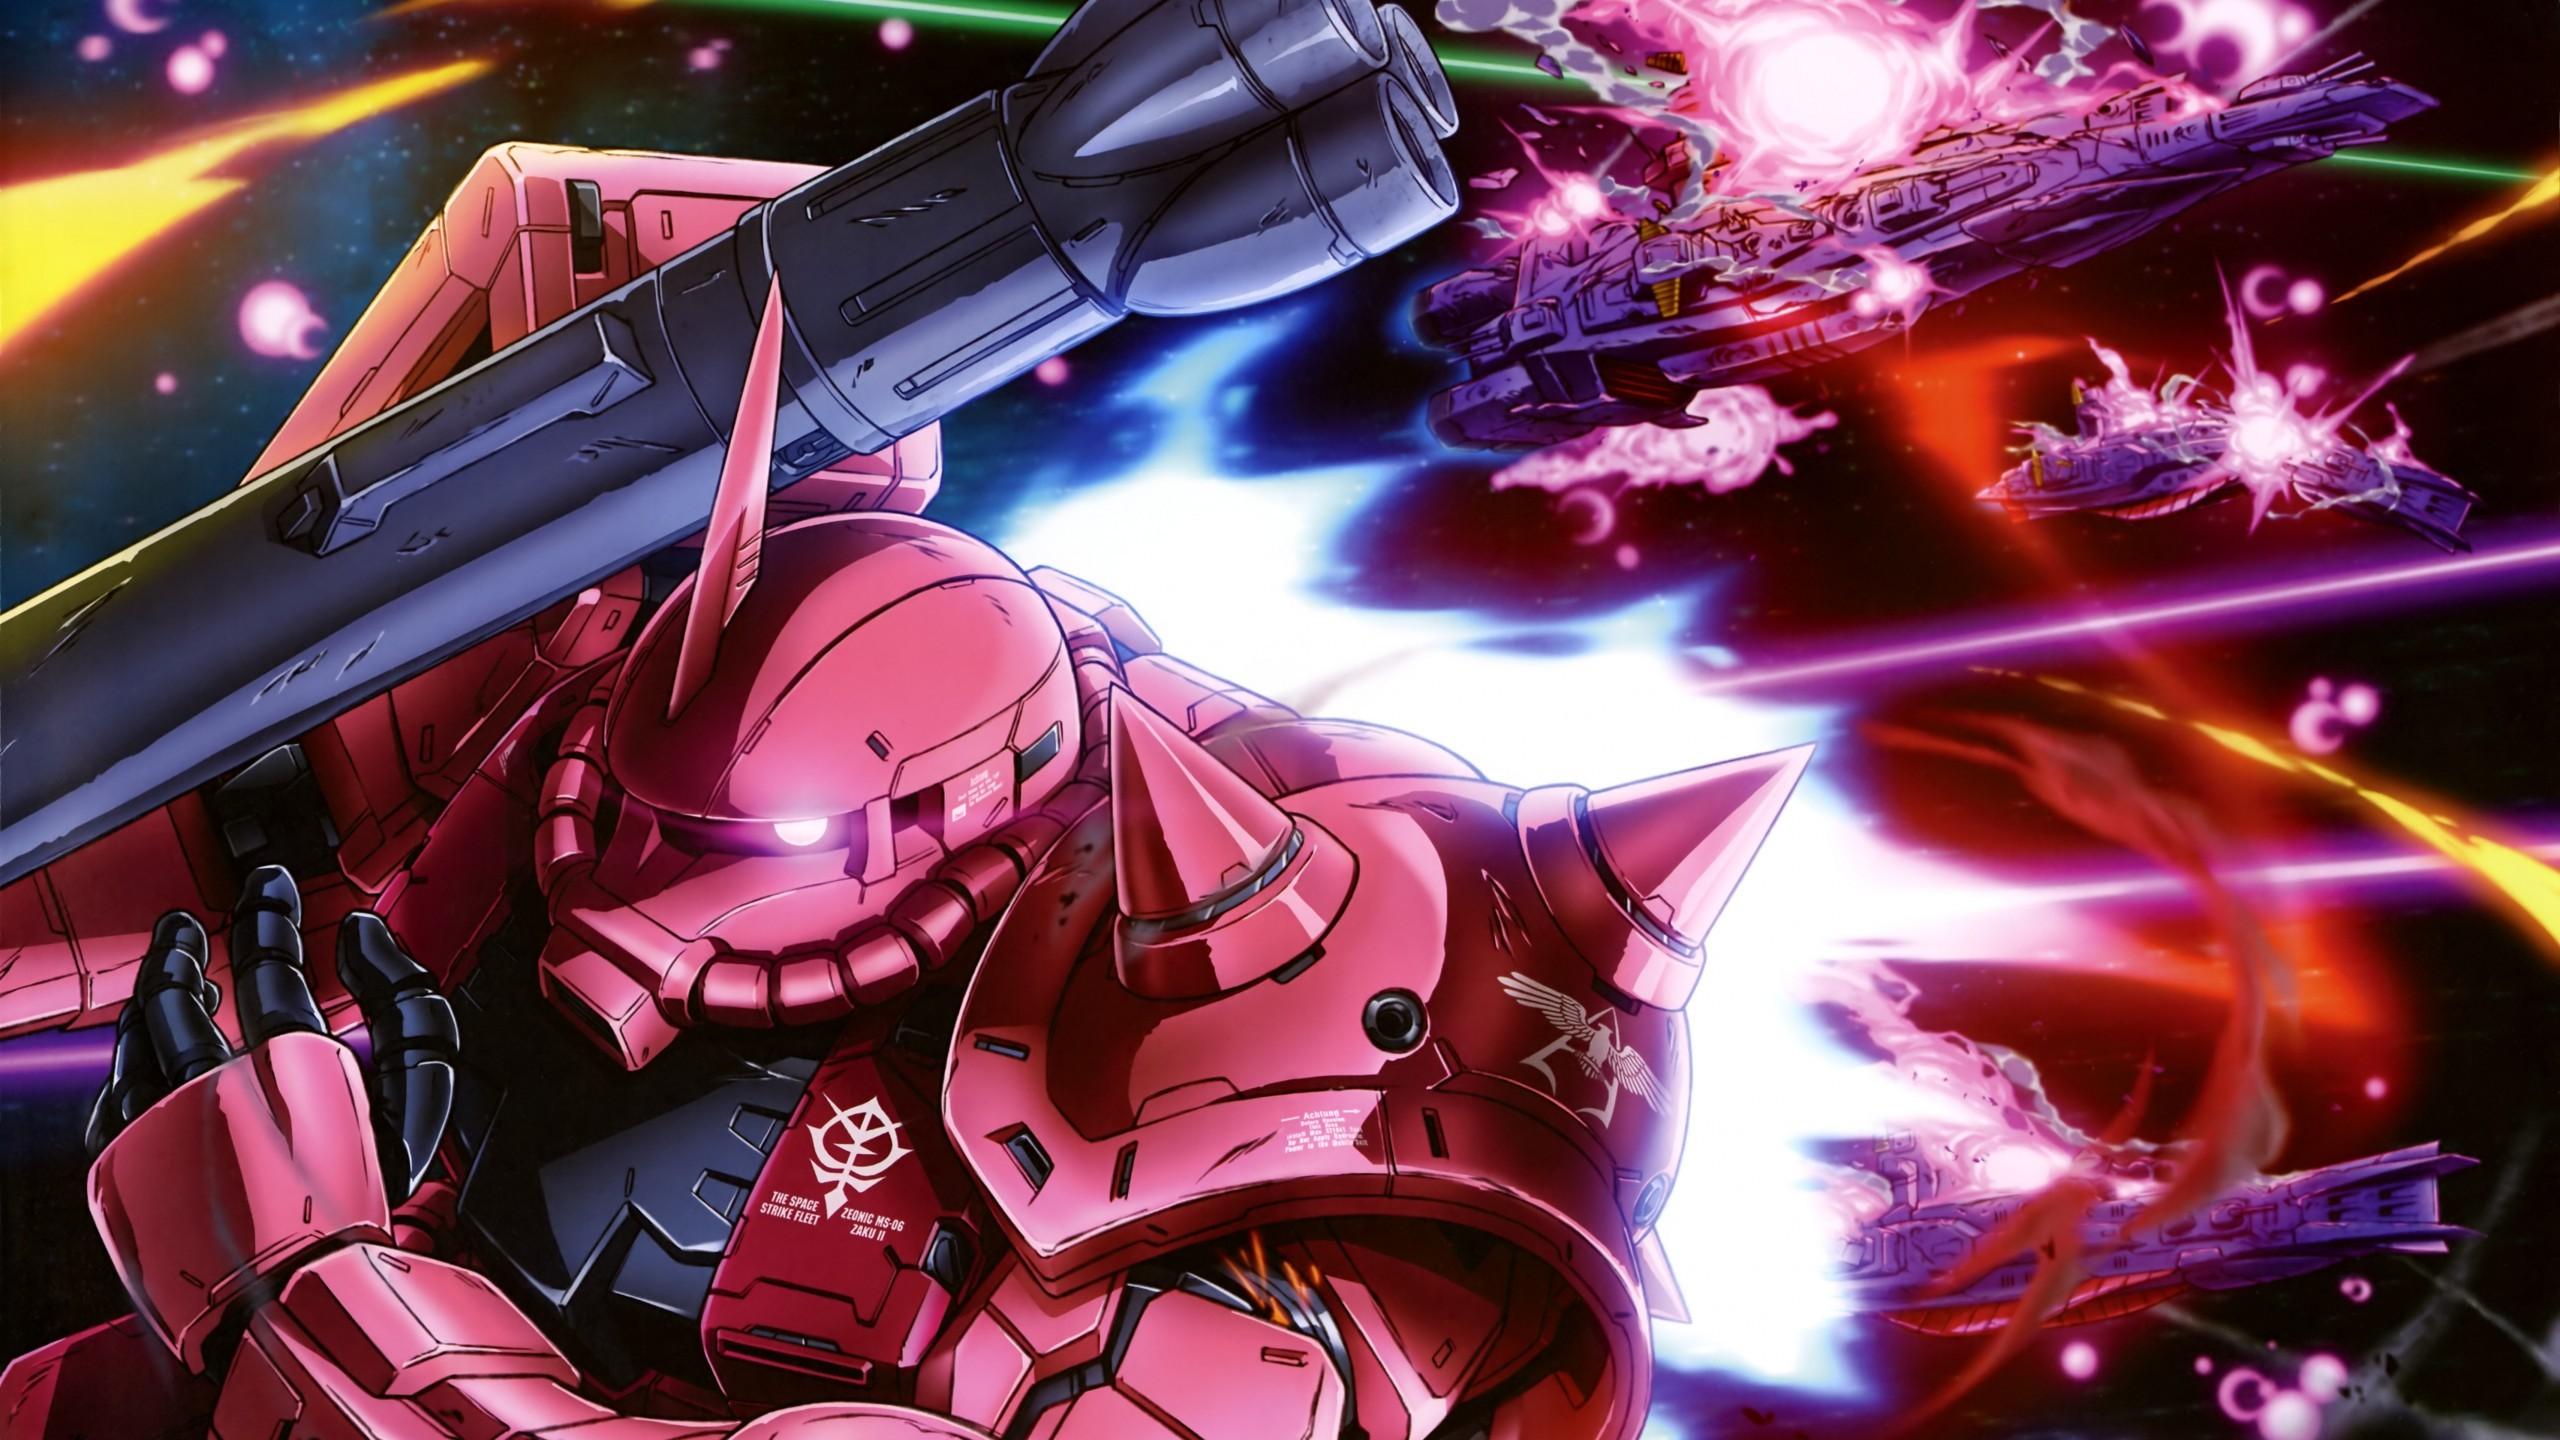 Download 2560x1440 Mobile Suit Gundam, Mecha, Robots, Sci Fi, Fight Wallpaper For IMac 27 Inch